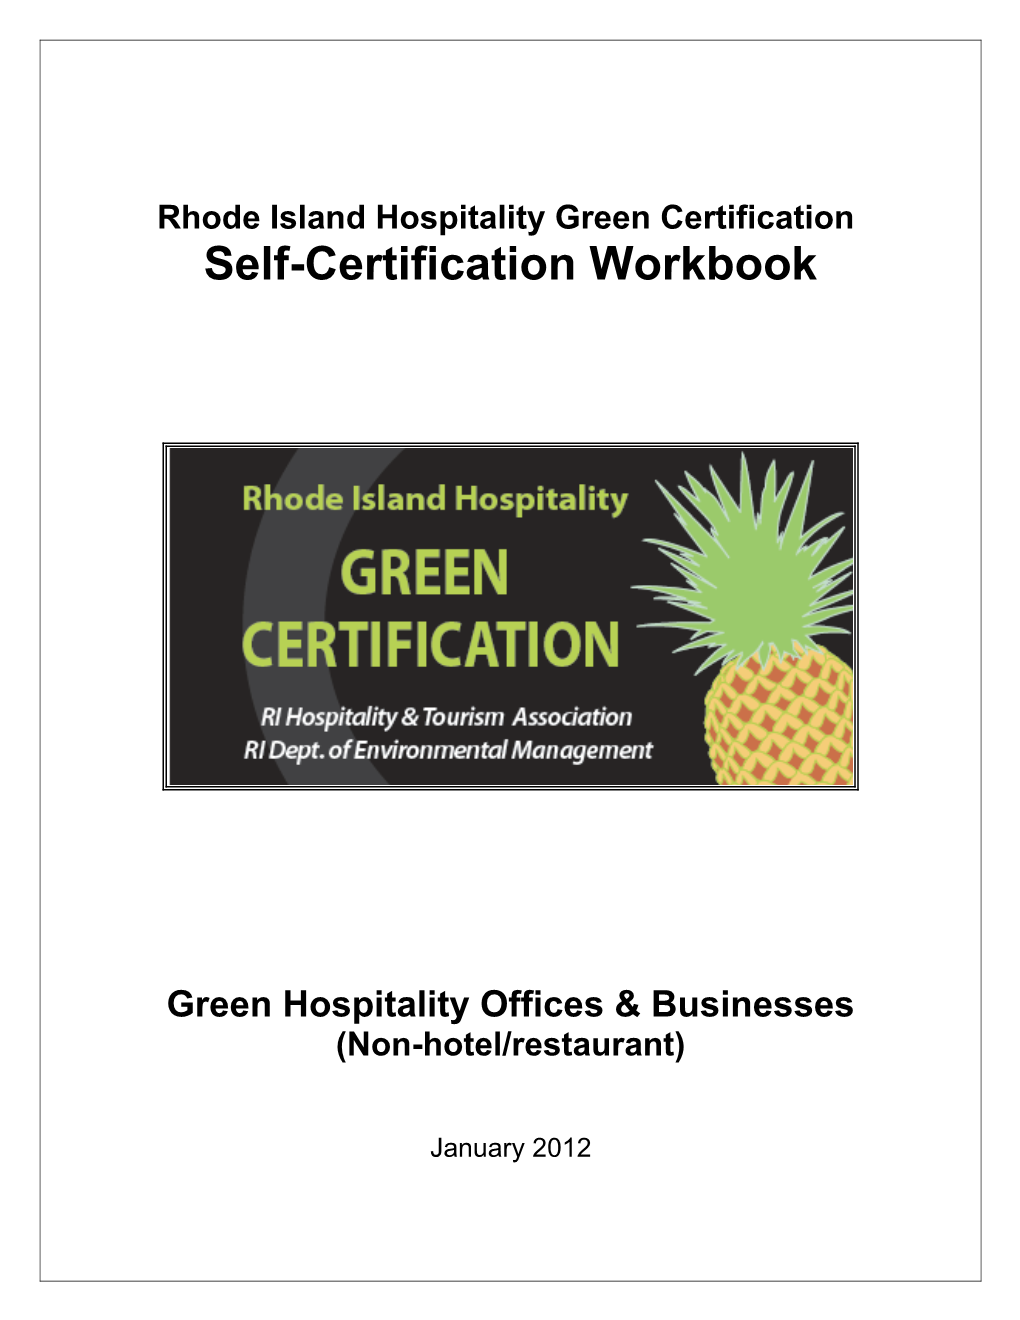 RI Green Hotel & Lodging Certification Workbook